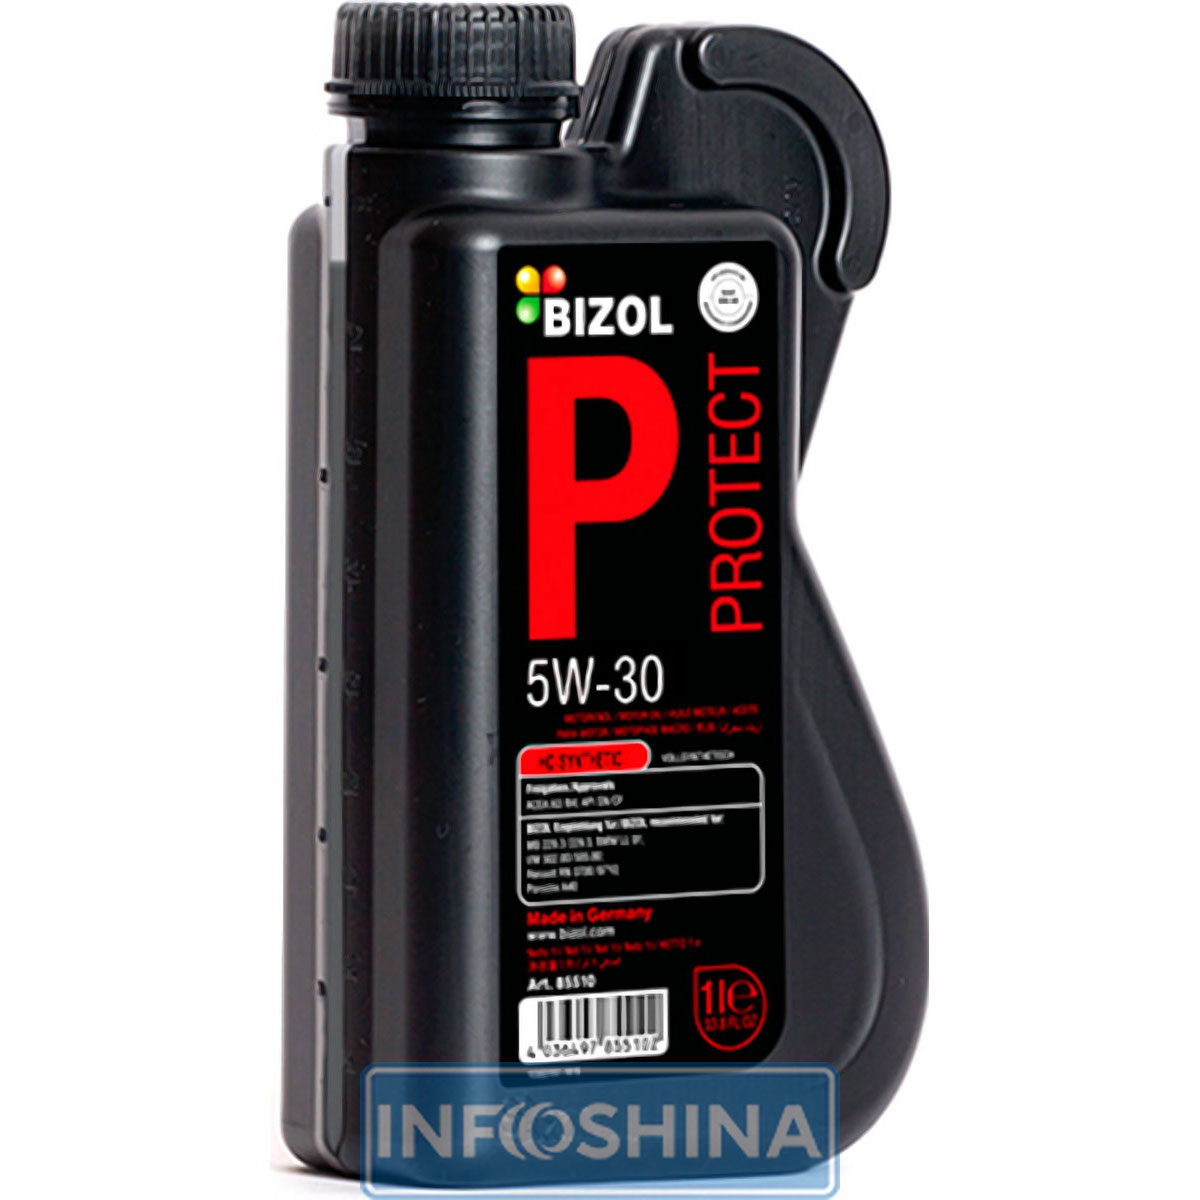 Купить масло Bizol Protect 5W-30 (1л)